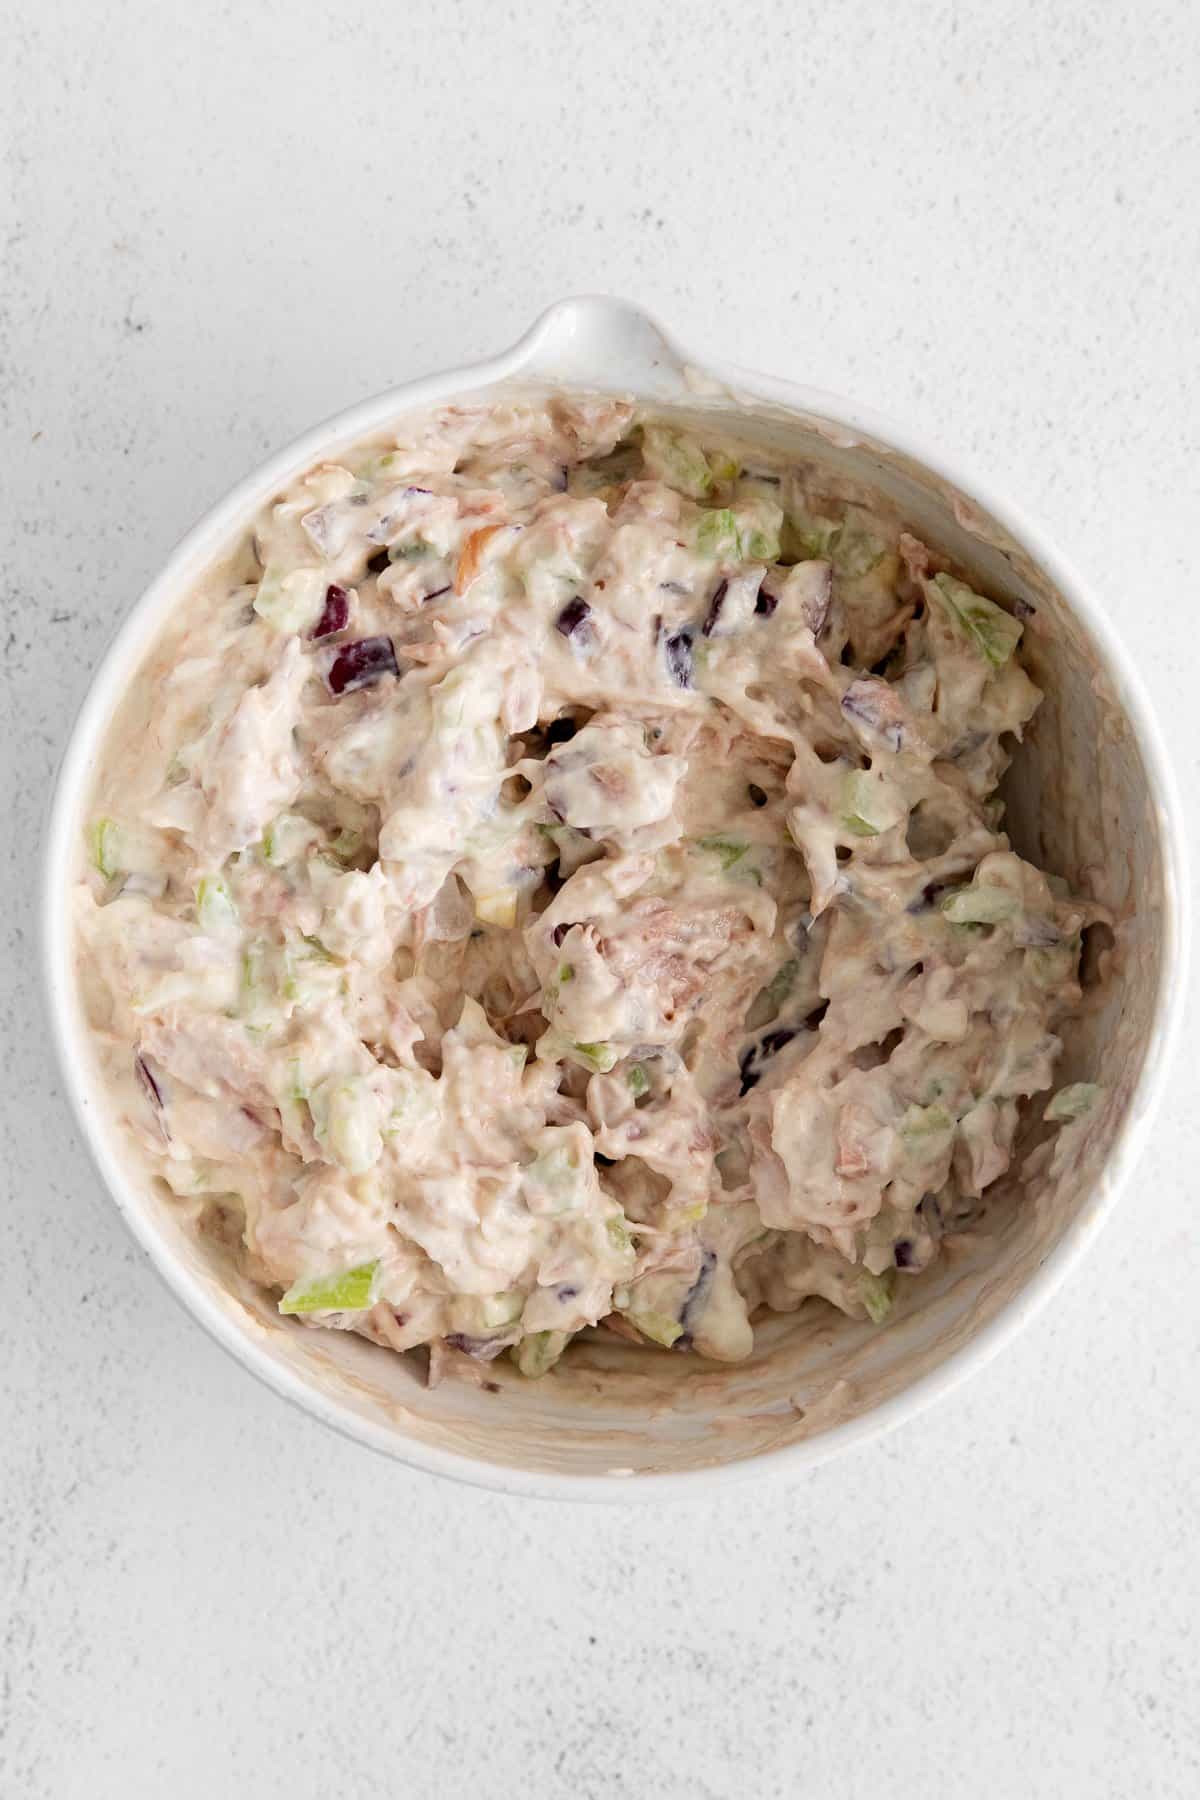 Healthy tuna salad in a bowl.